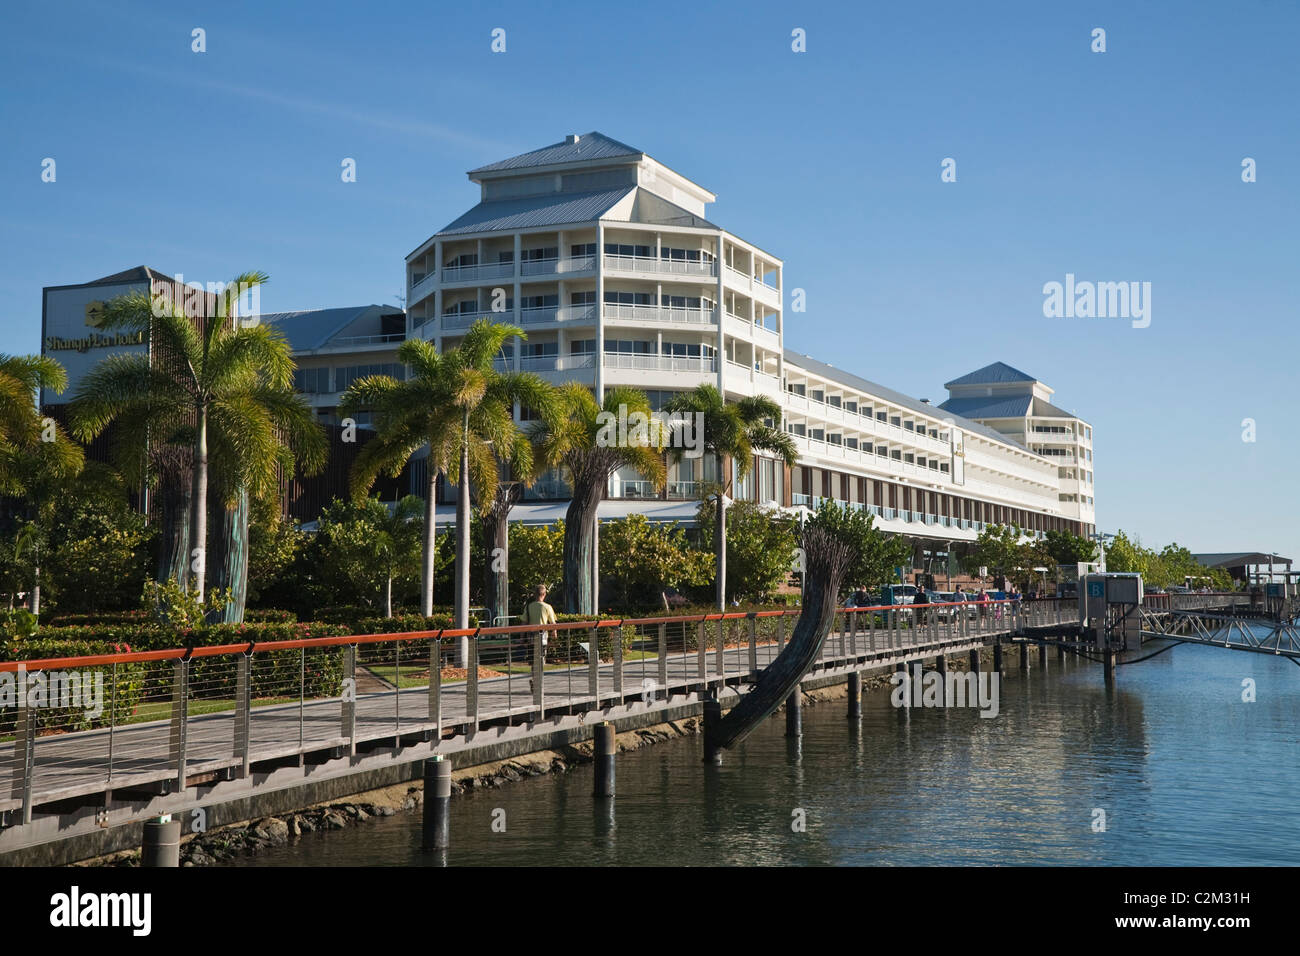 The Shangri-La Hotel at Marlin Marina. Cairns, Queensland, Australia Stock Photo